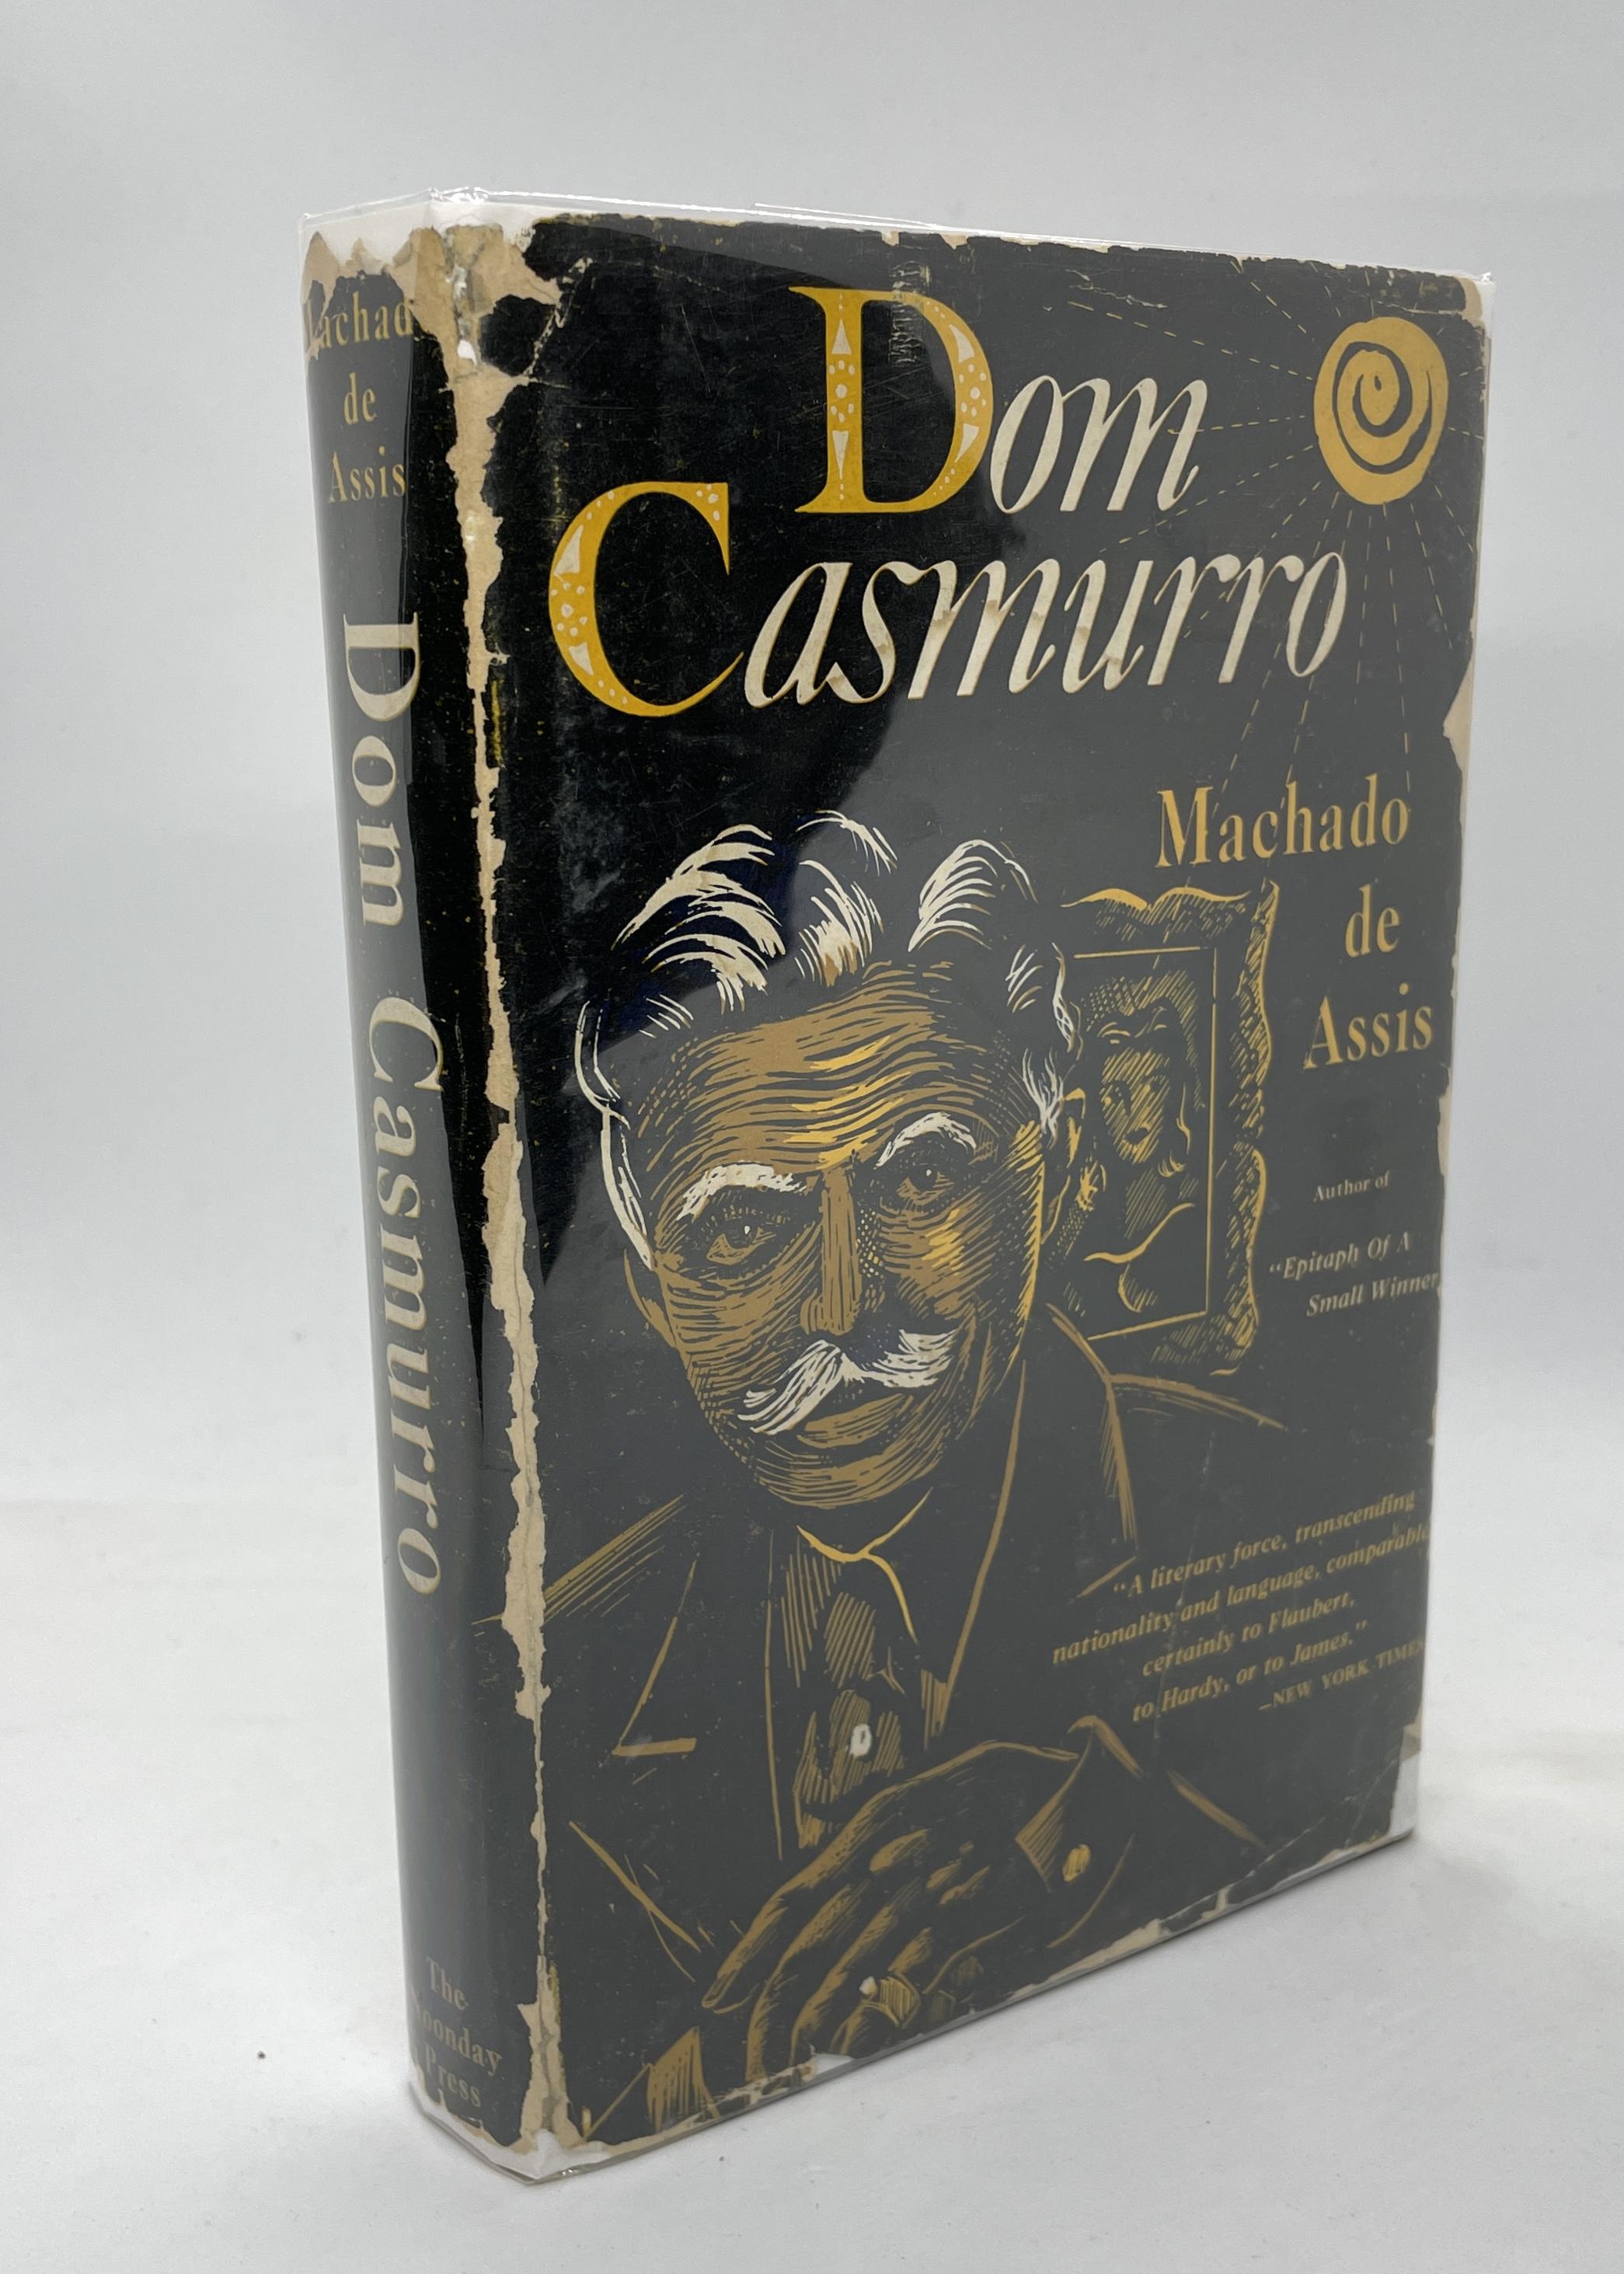 Dom Casmurro (First American Edition) by Machado De Assis (author